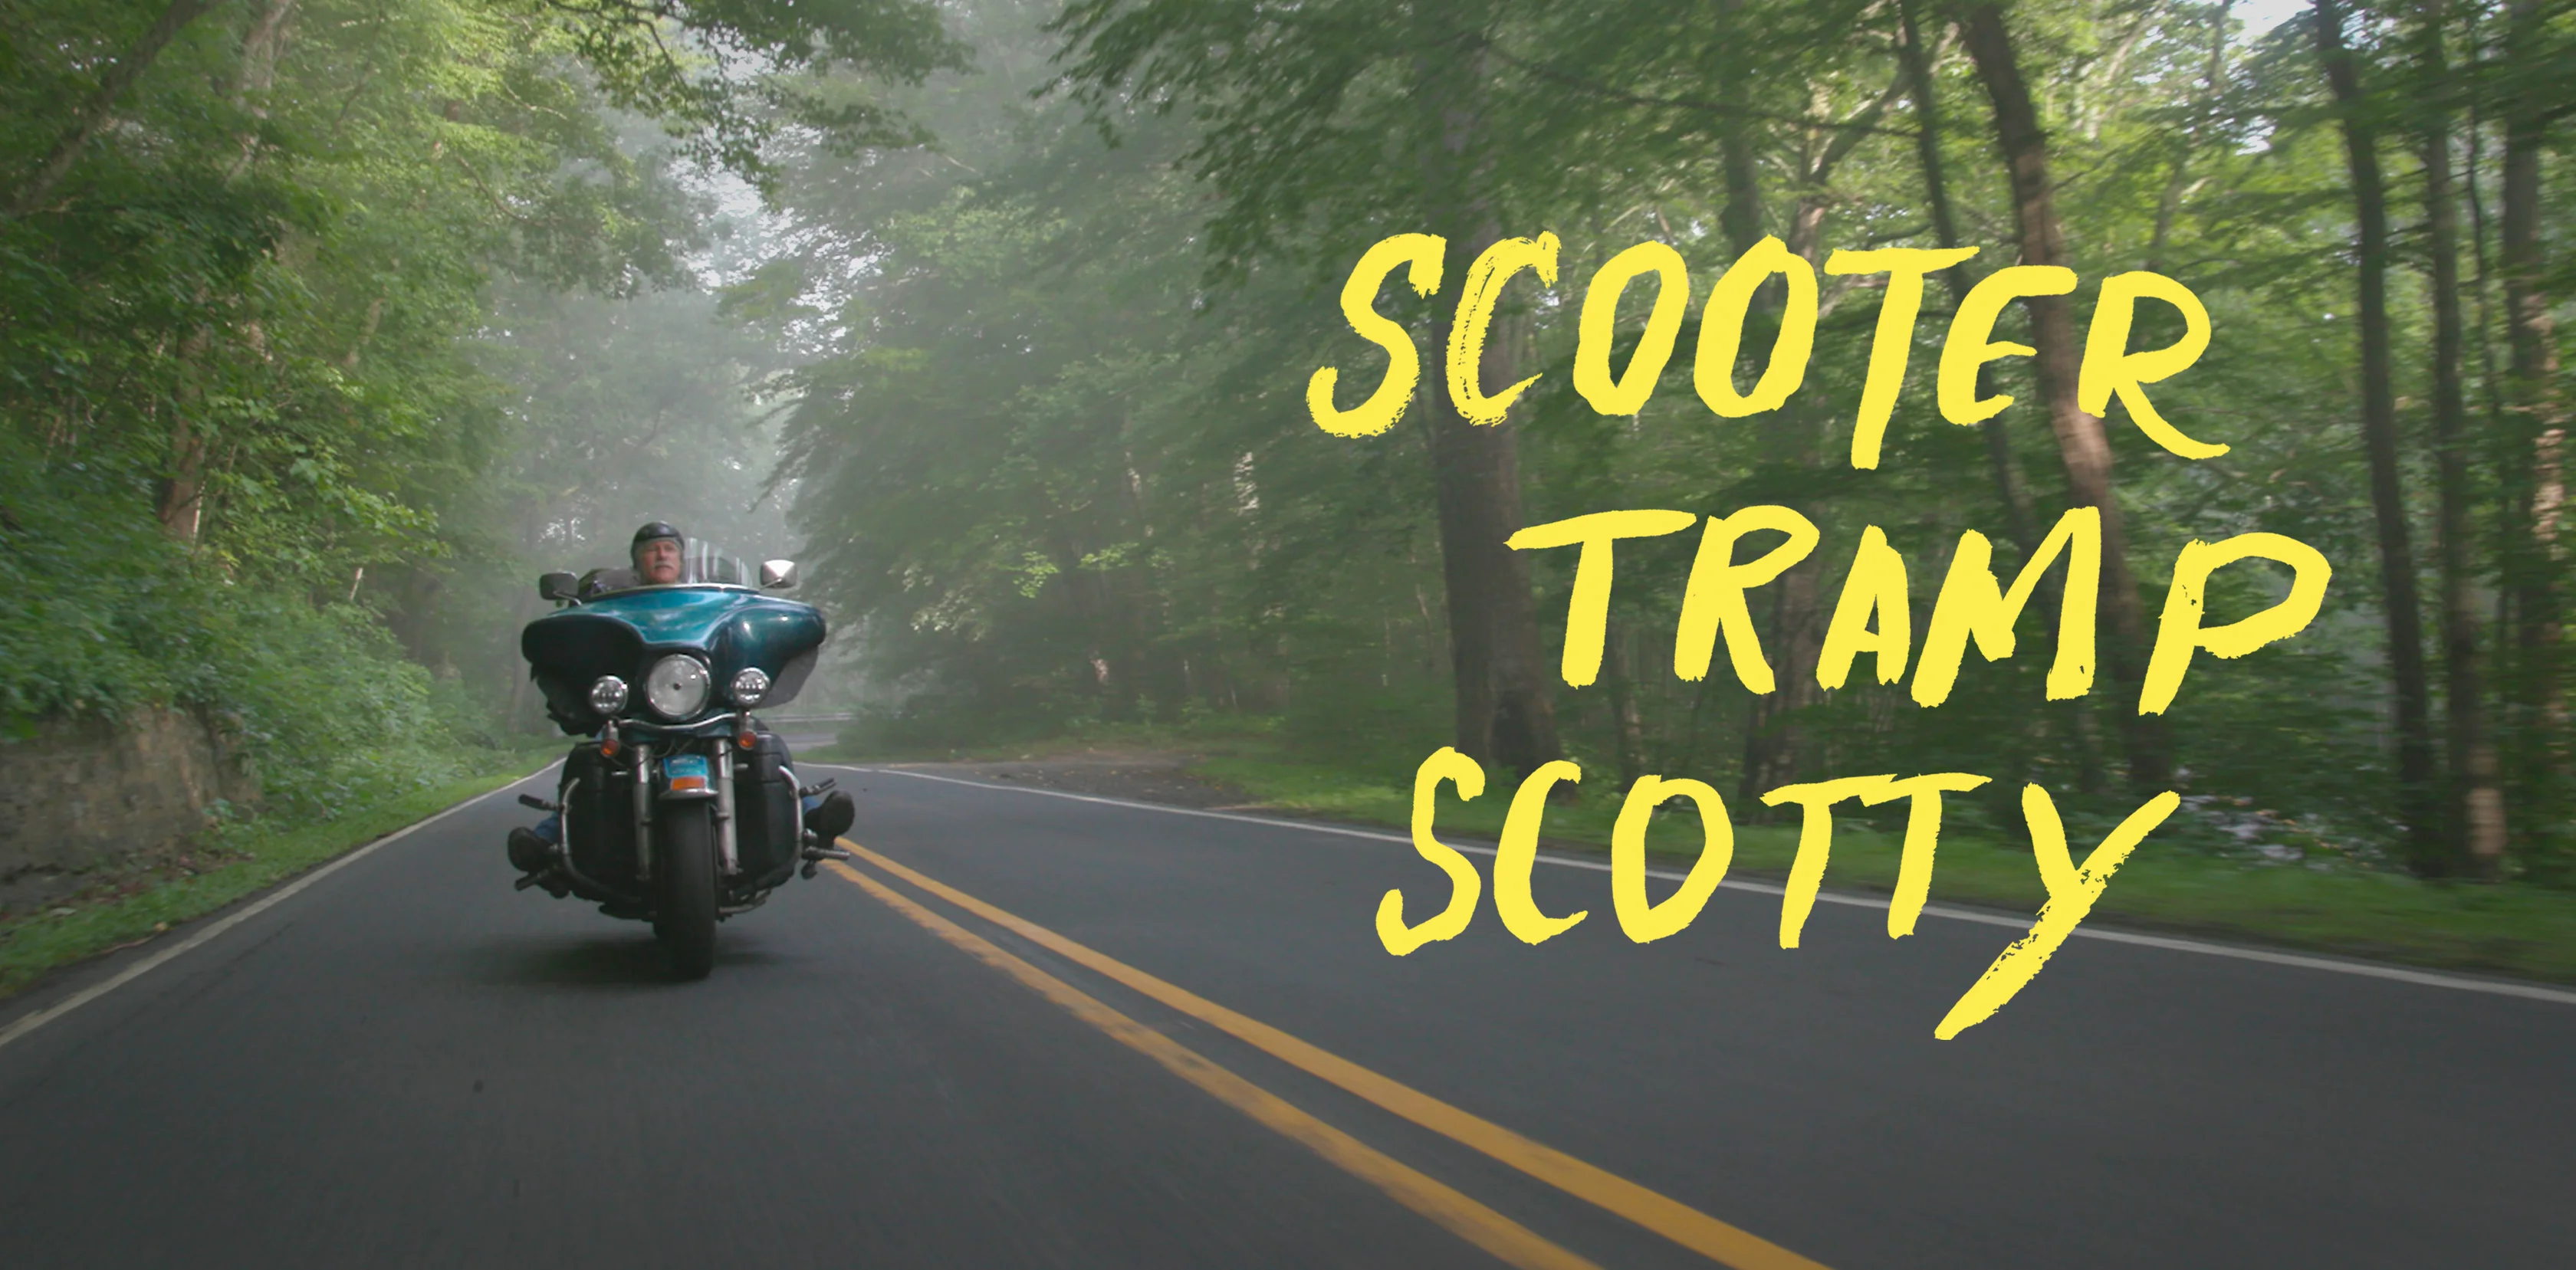 Scooter Tramp Scotty on Vimeo